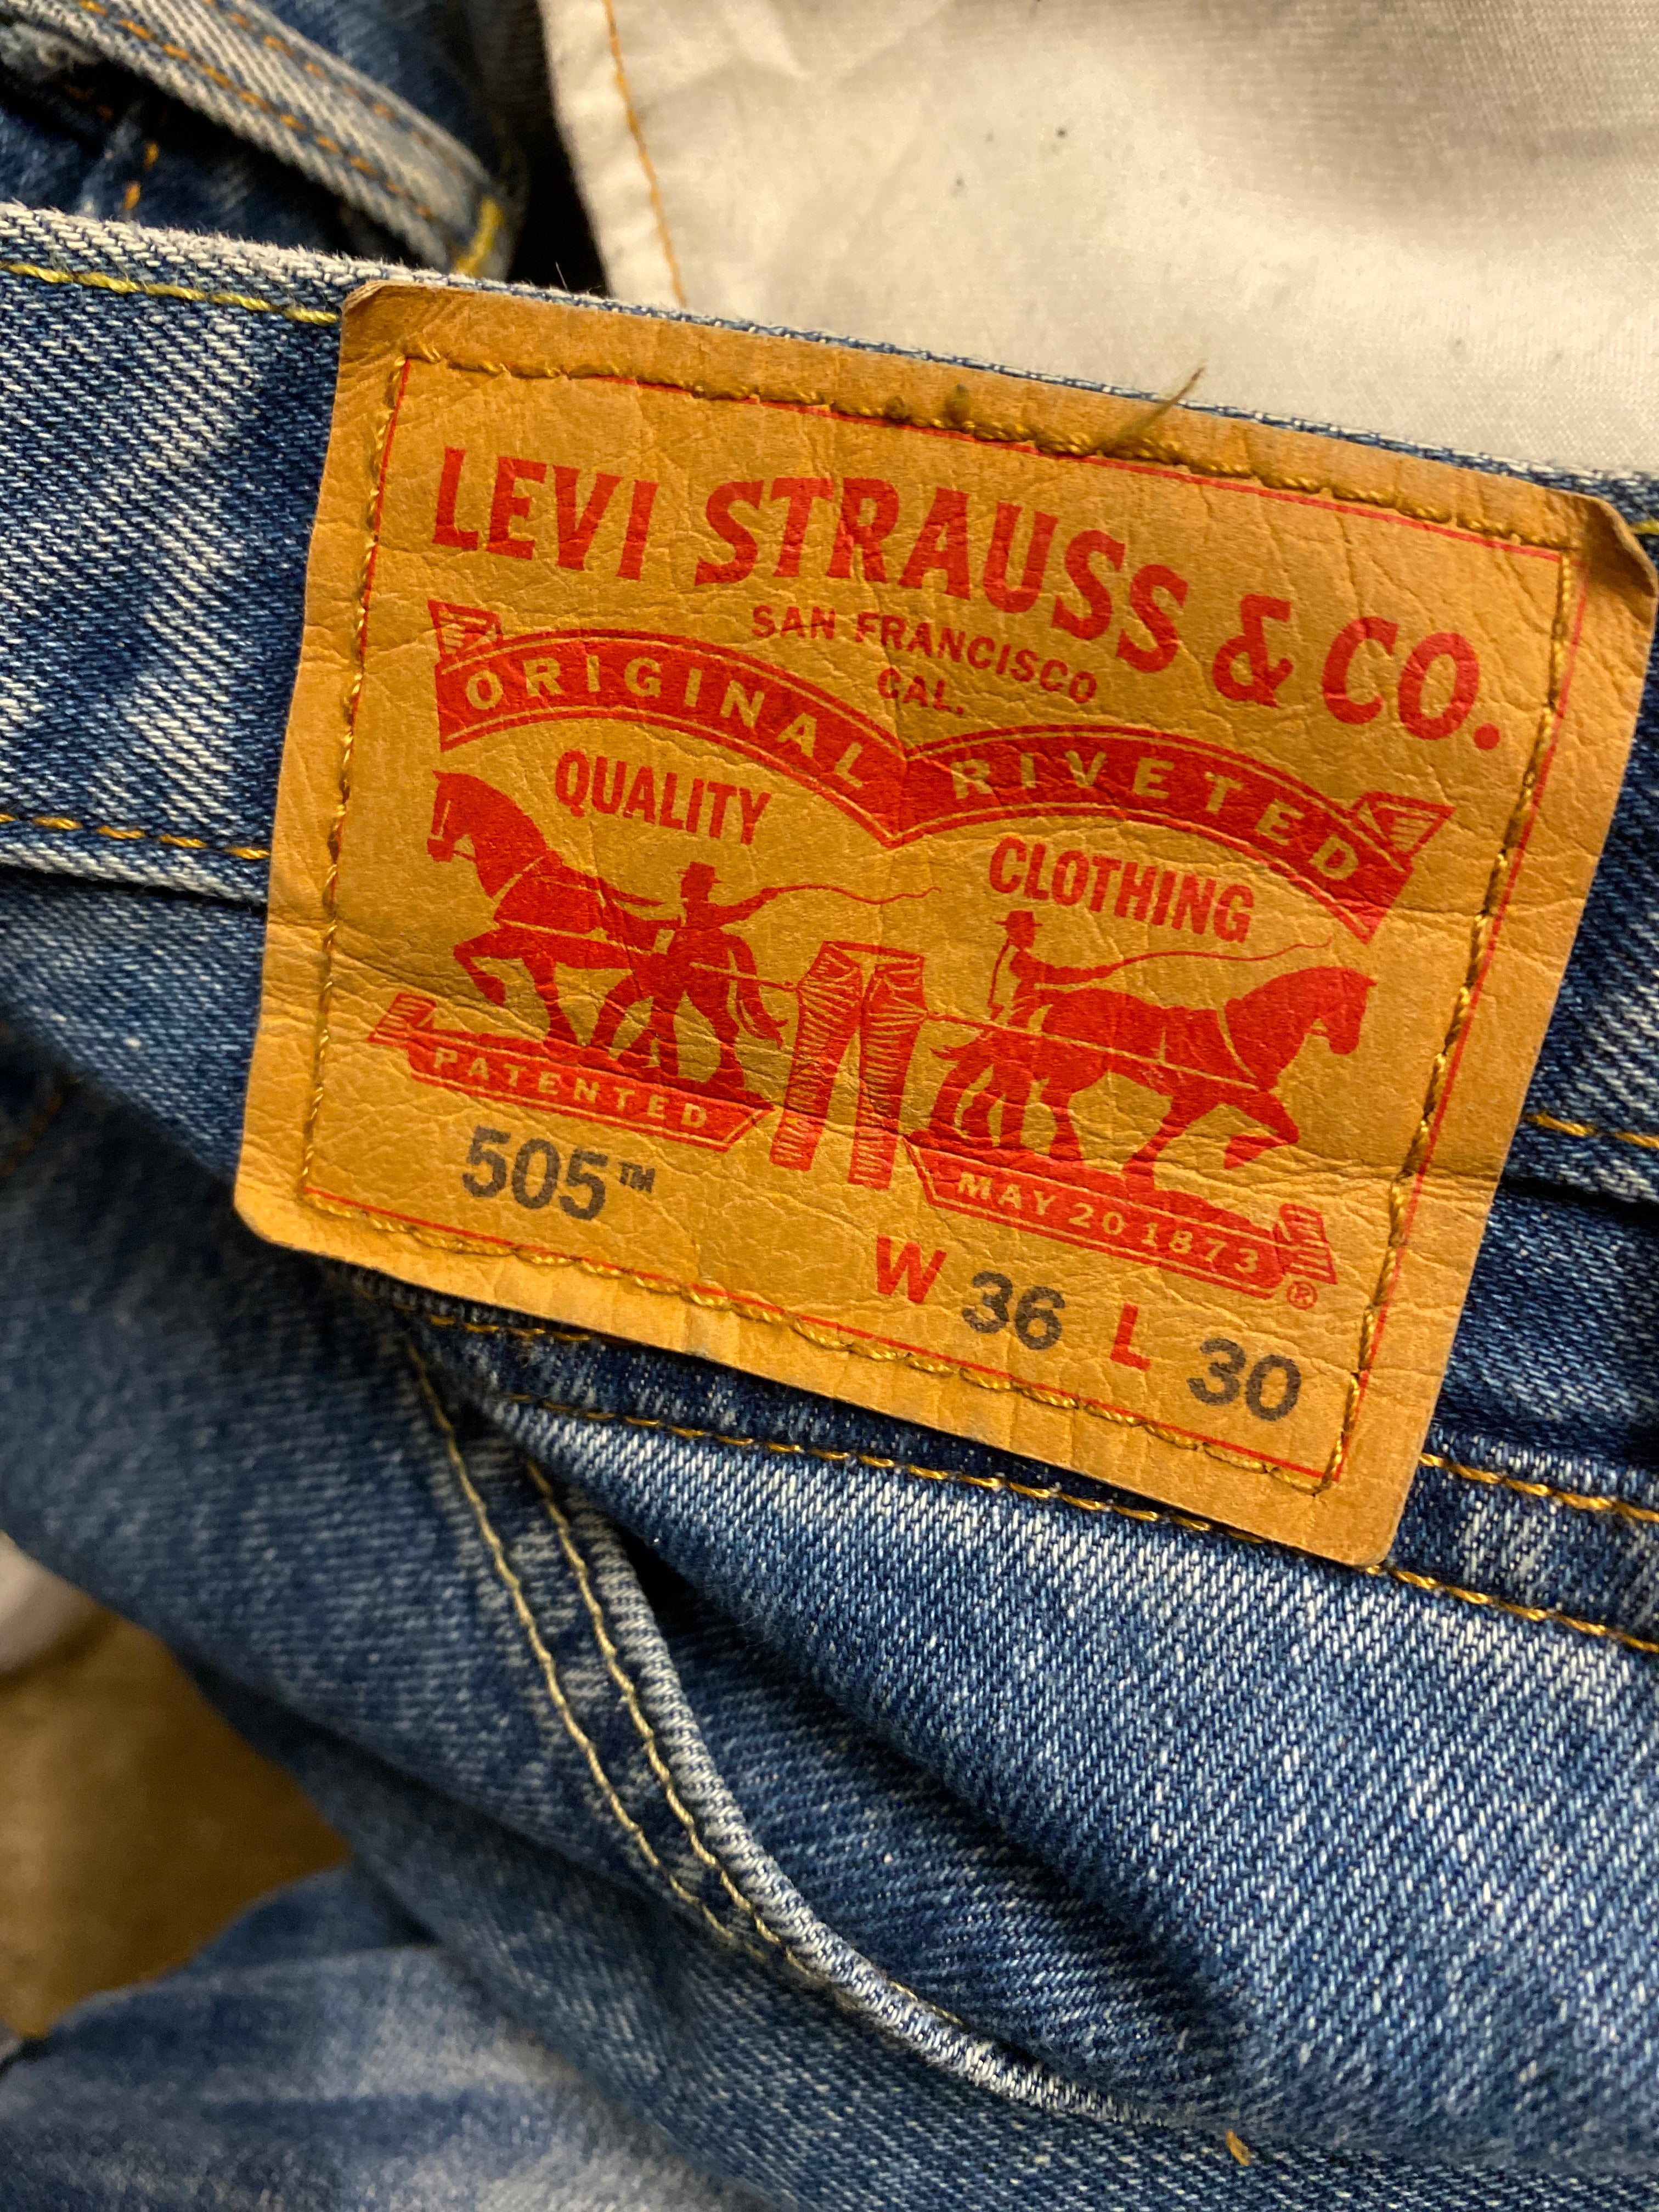 Jeans Hose Herren Levis 505 W36 L30